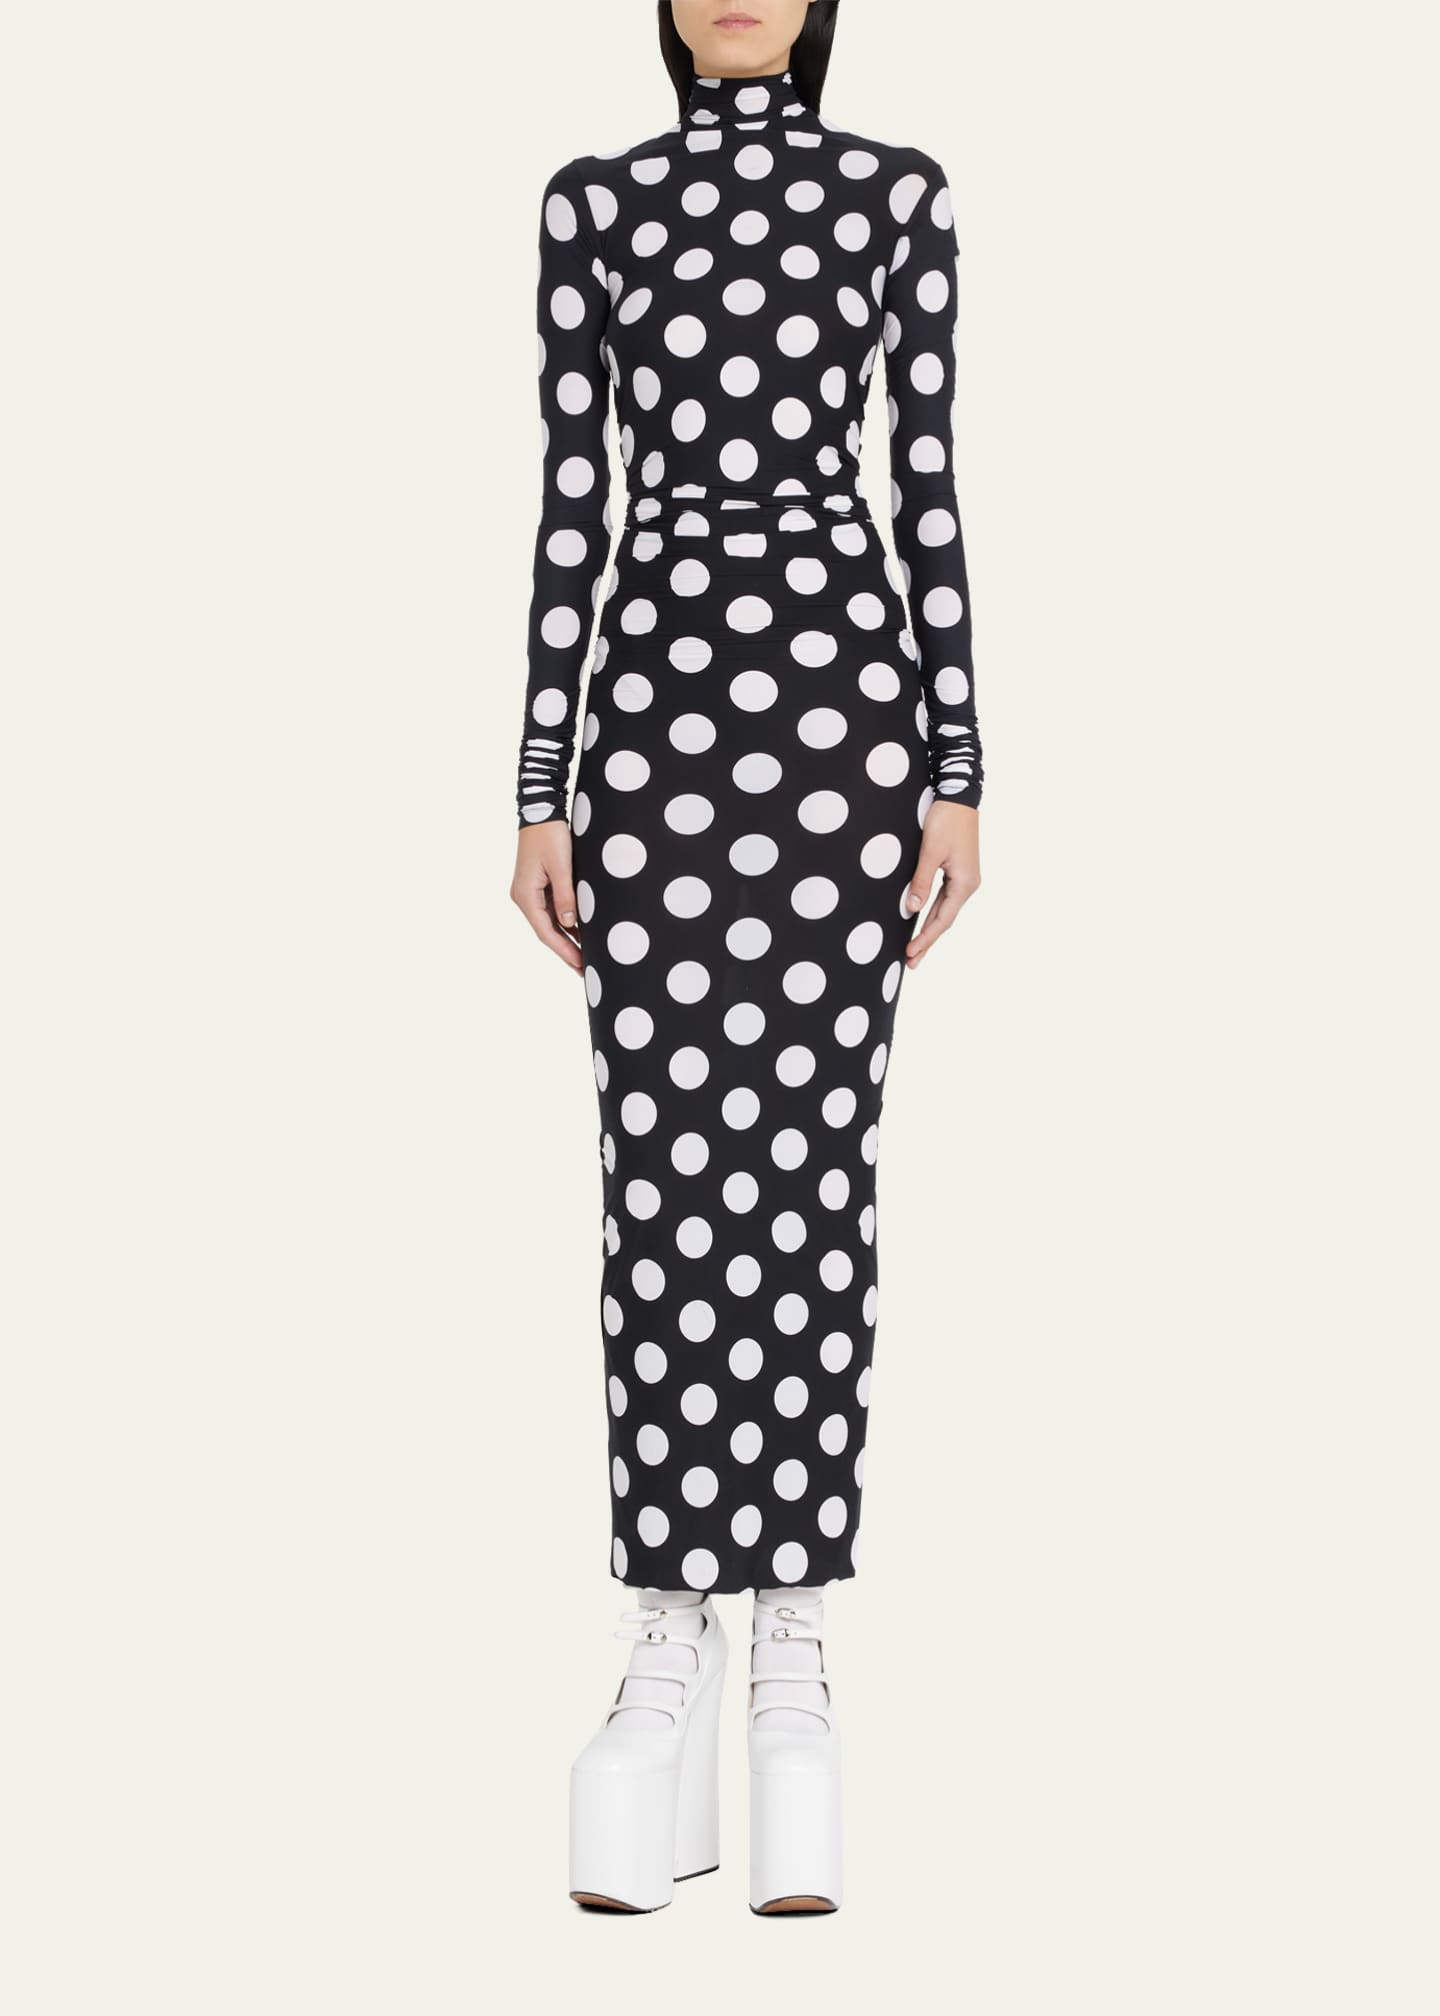 Marc Jacobs Polka Dot Body-Con Dress - Bergdorf